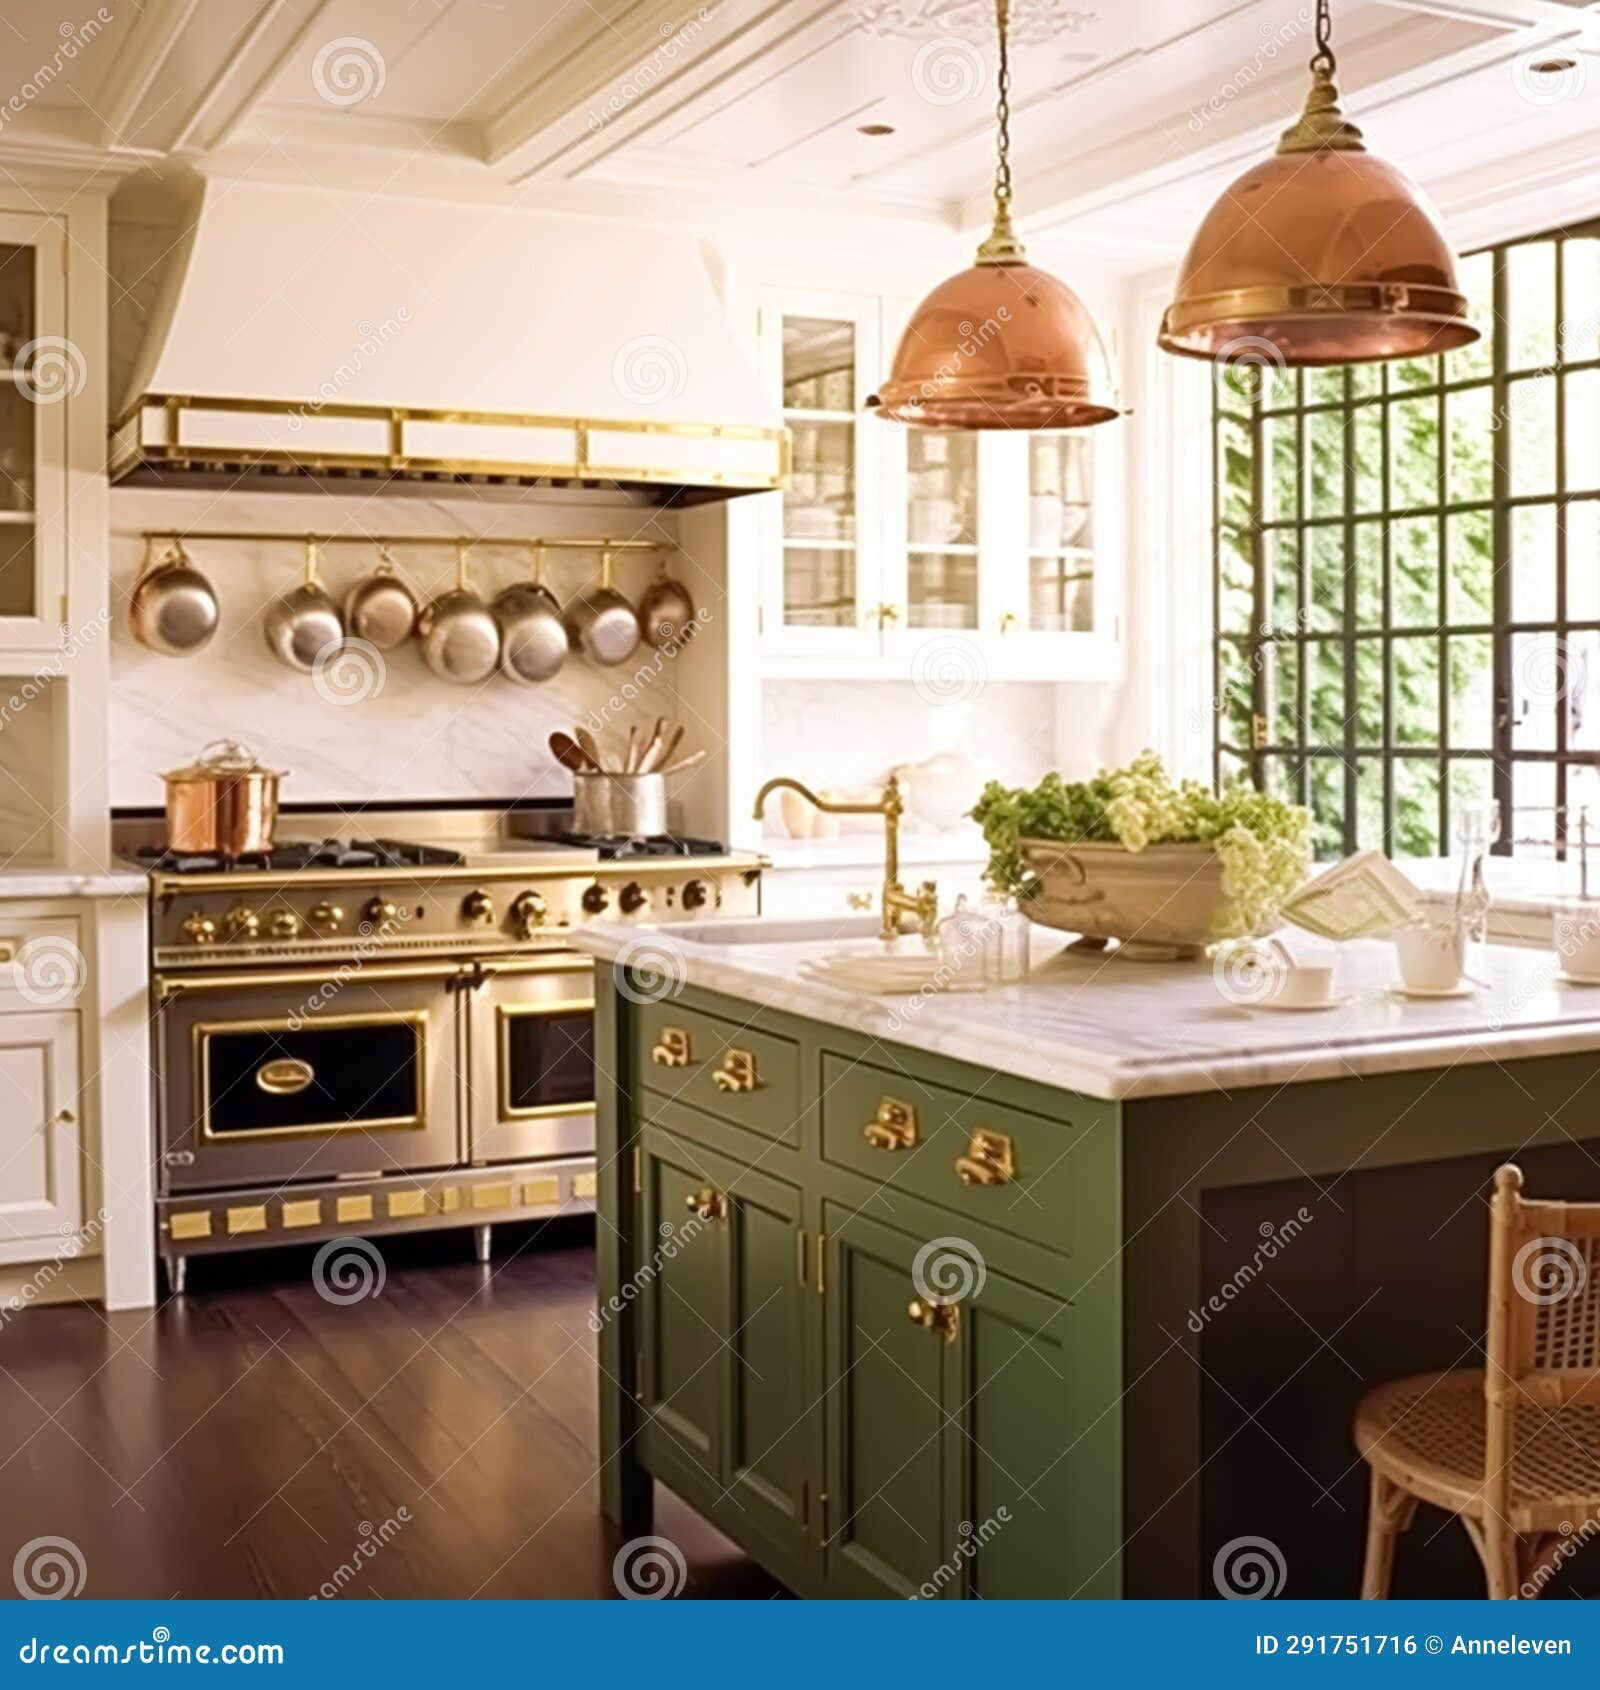 Kitchen Decor, Interior Design And House Improvement, Bespoke Sage